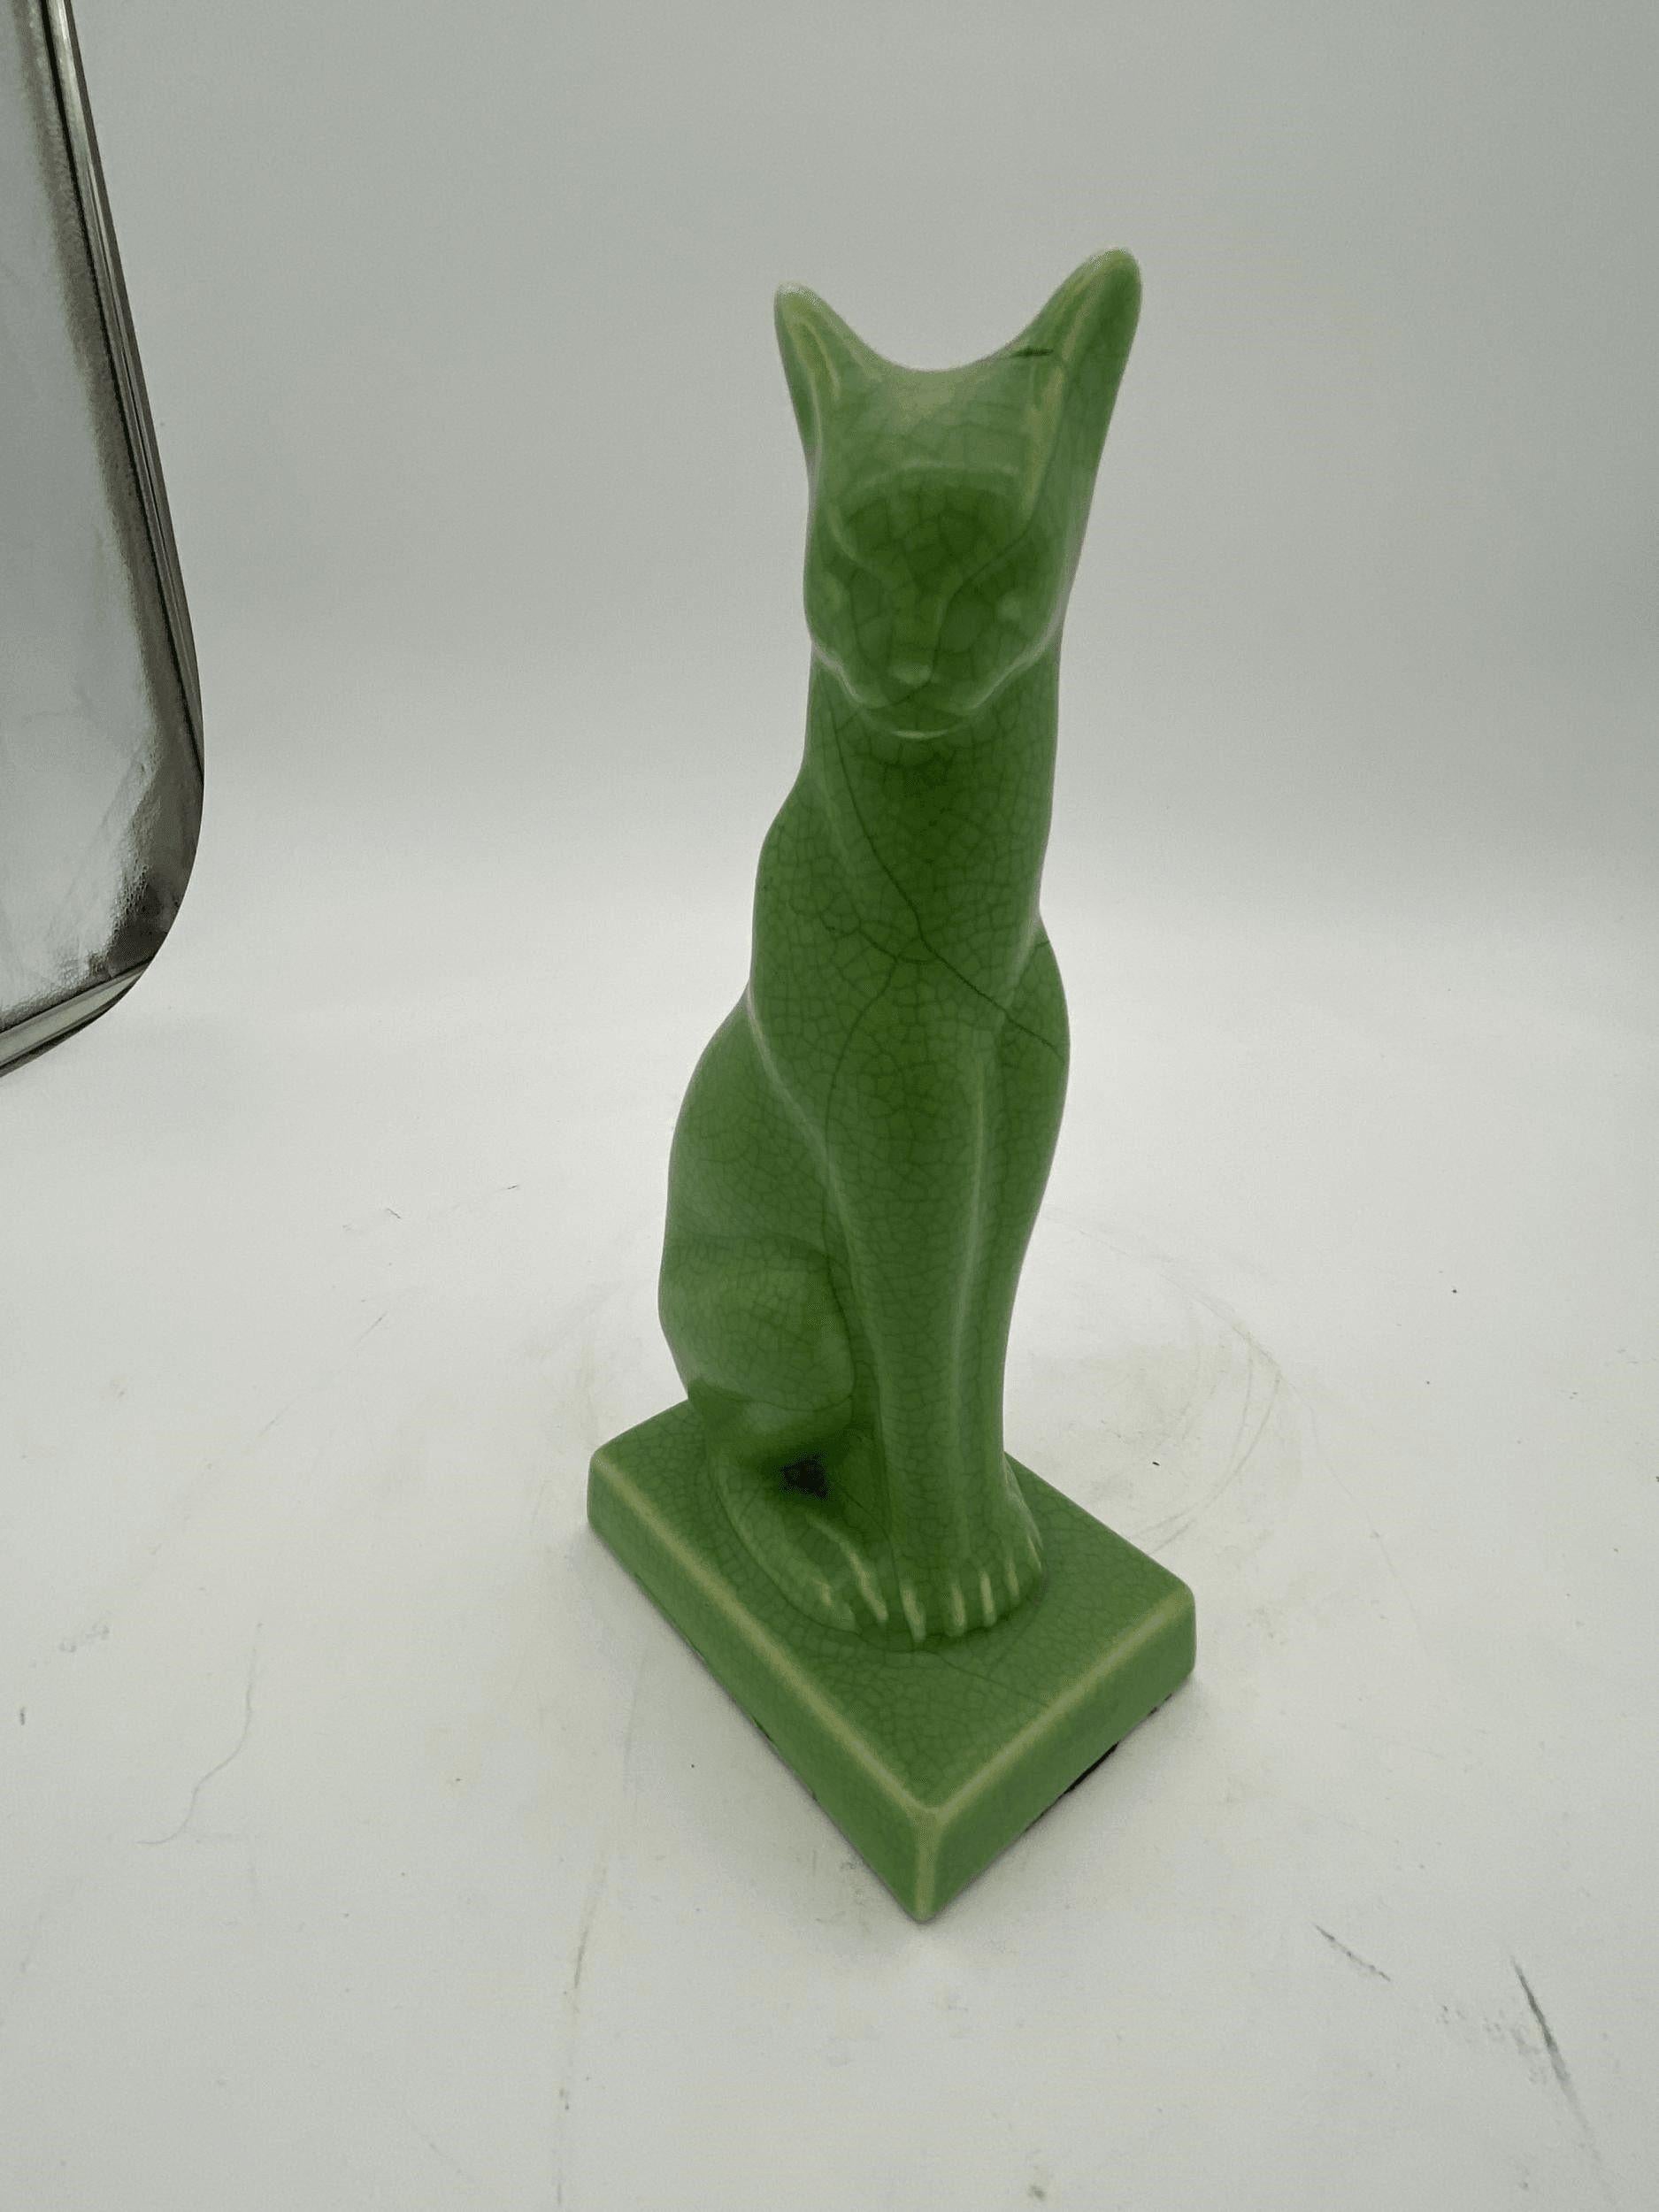 American Egyptian Revival Art Deco Green Ceramic Bastet Cat, Pair